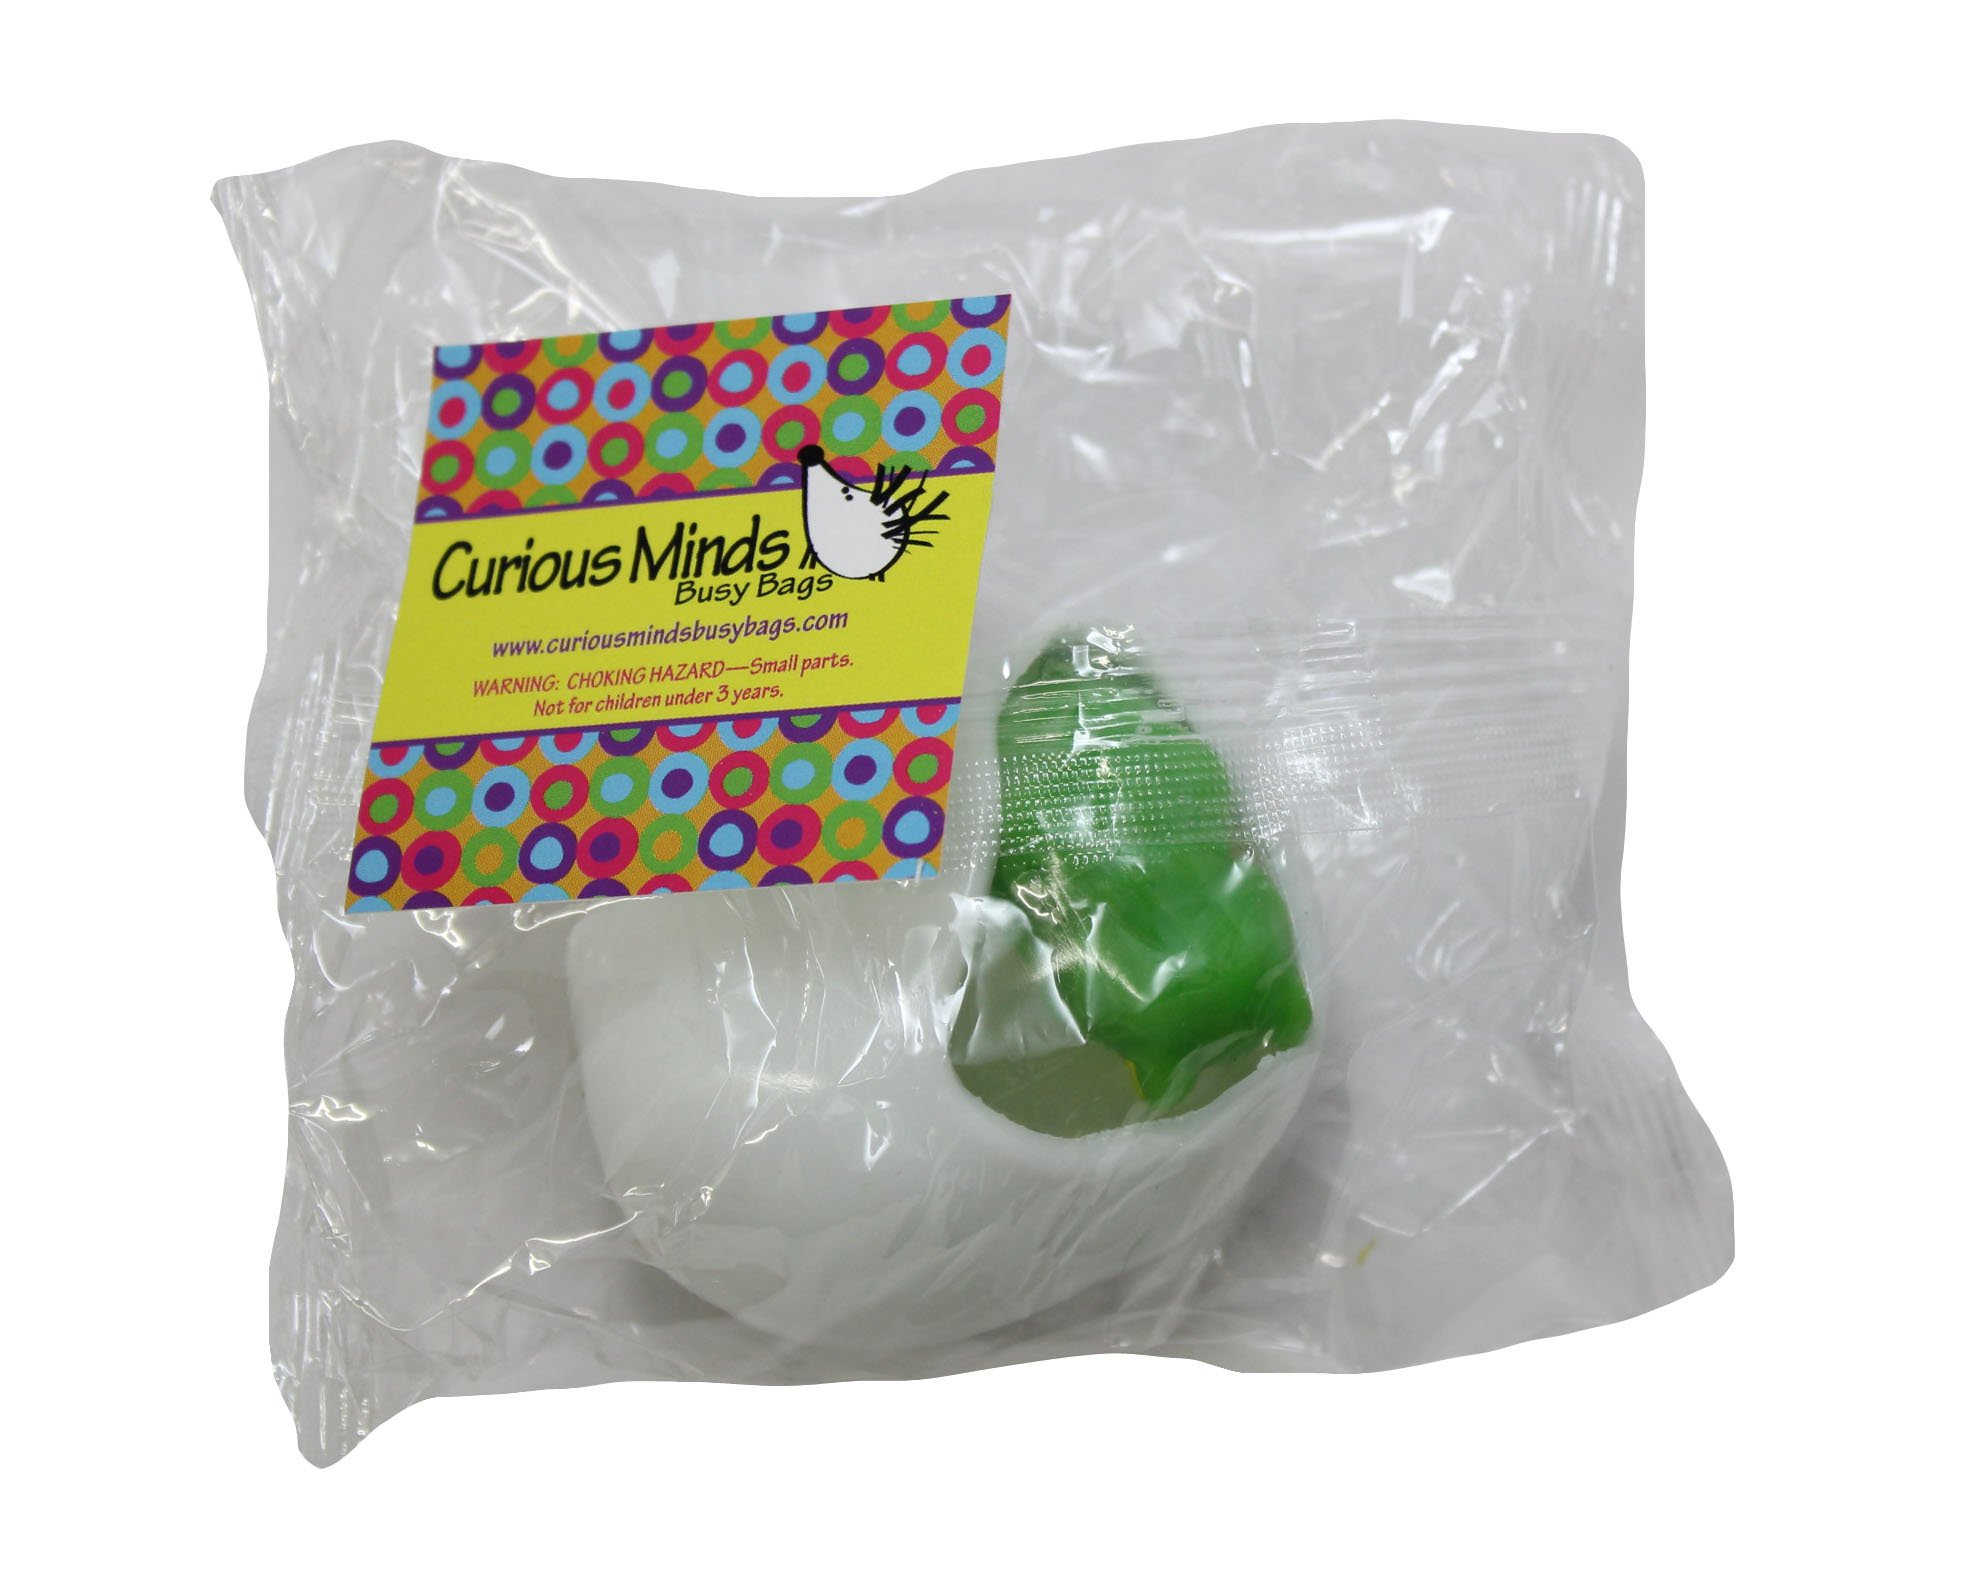 Hatching Dinosaur Egg Squeeze Stress Ball - Squishy Toy - Sensory